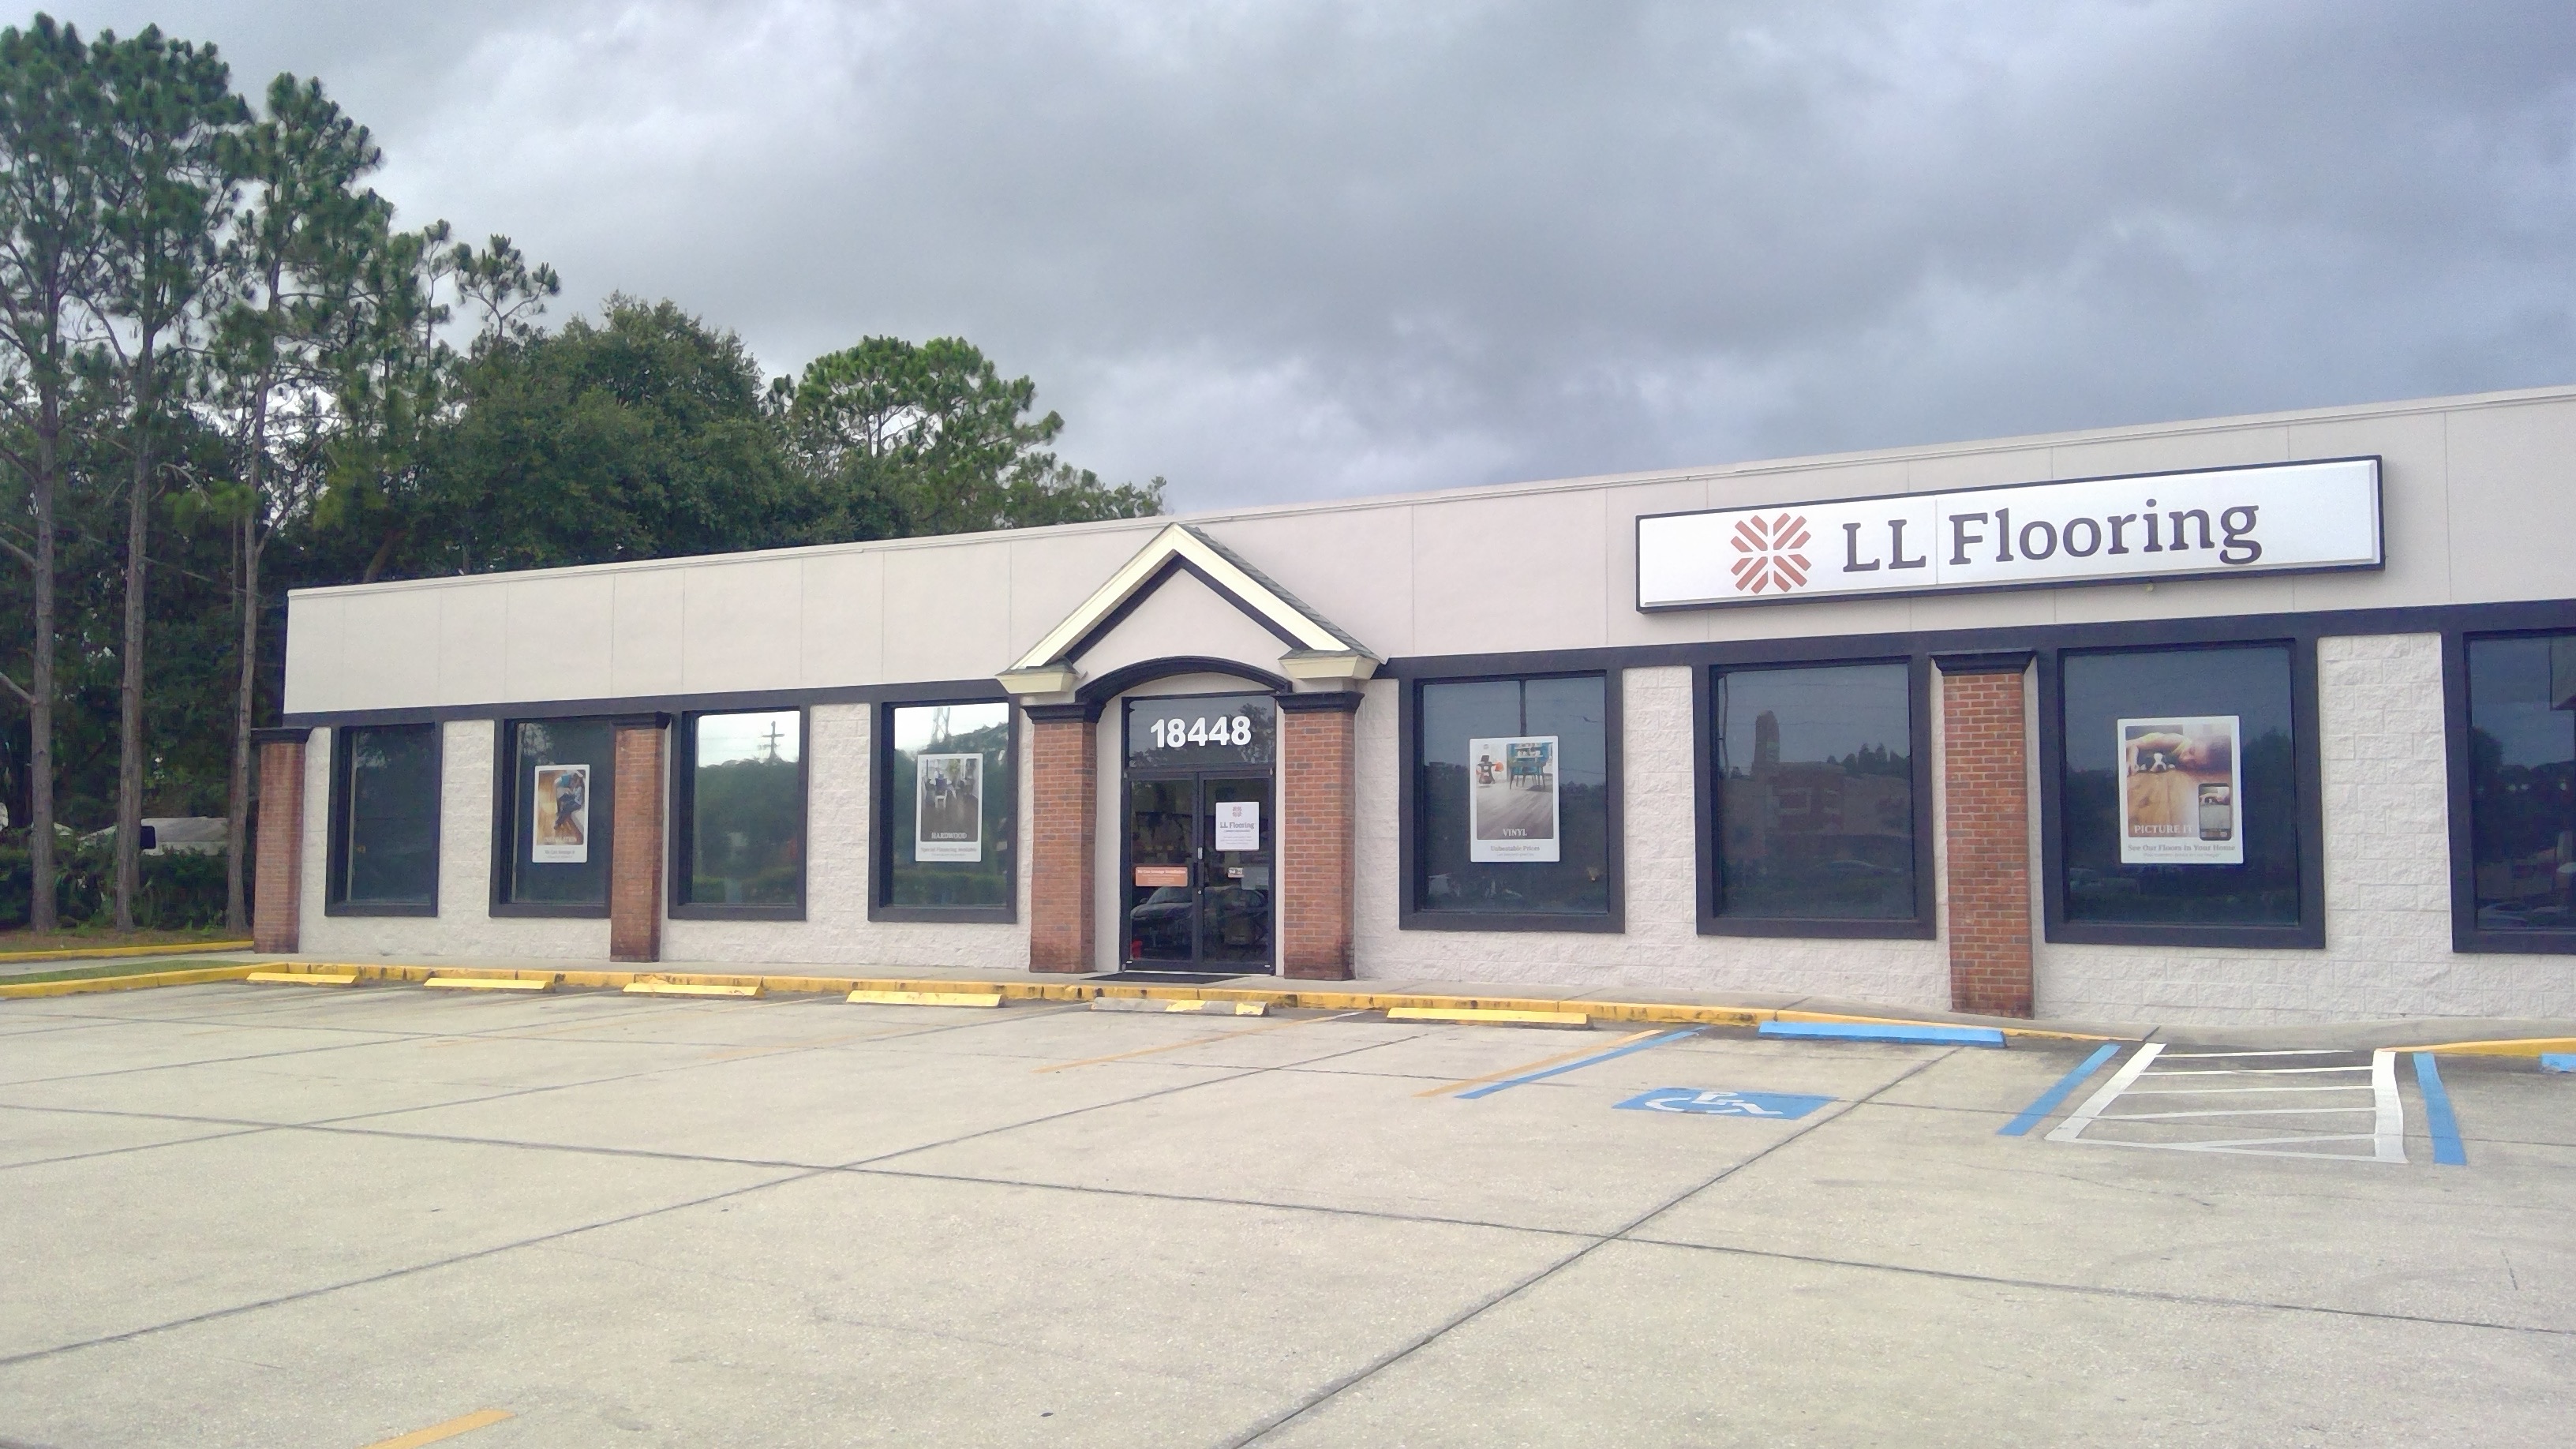 LL Flooring #1045 Lutz | 18448 N US Highway 41 | Storefront LL Flooring Lutz (813)909-7744